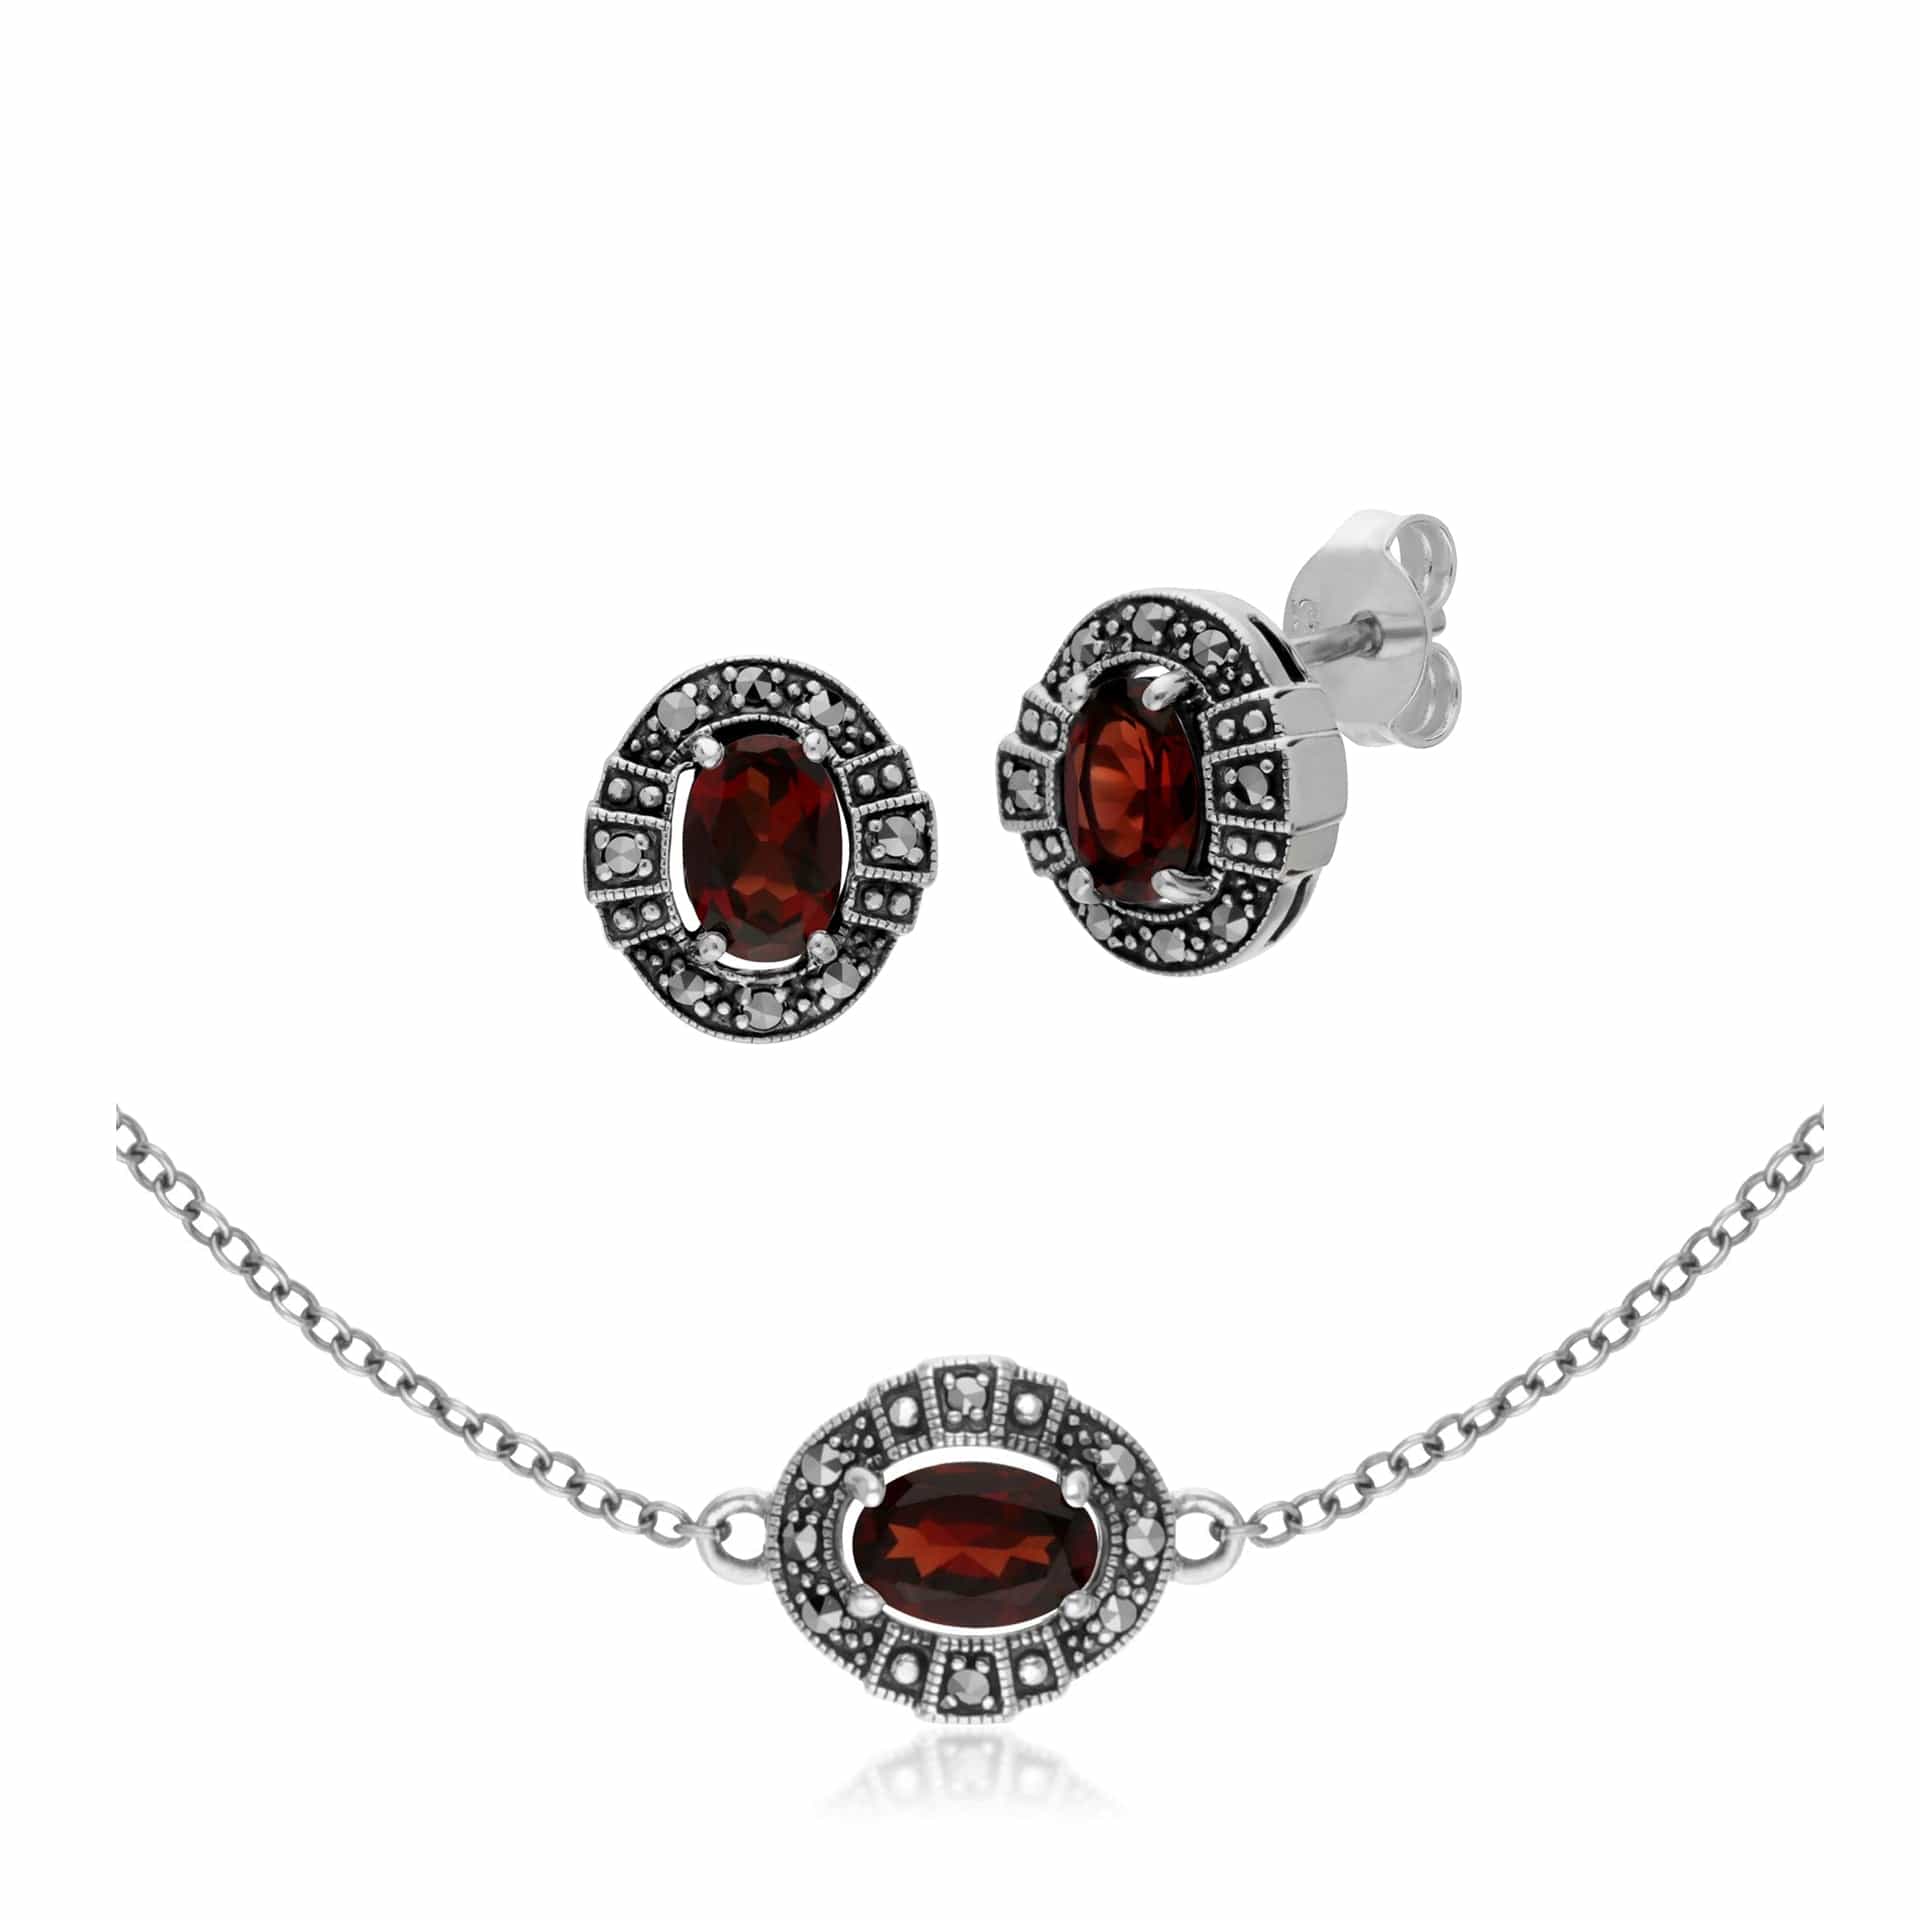 214E873003925-214L165403925 Art Deco Style Oval Garnet and Marcasite Cluster Stud Earrings & Bracelet Set in 925 Sterling Silver 1